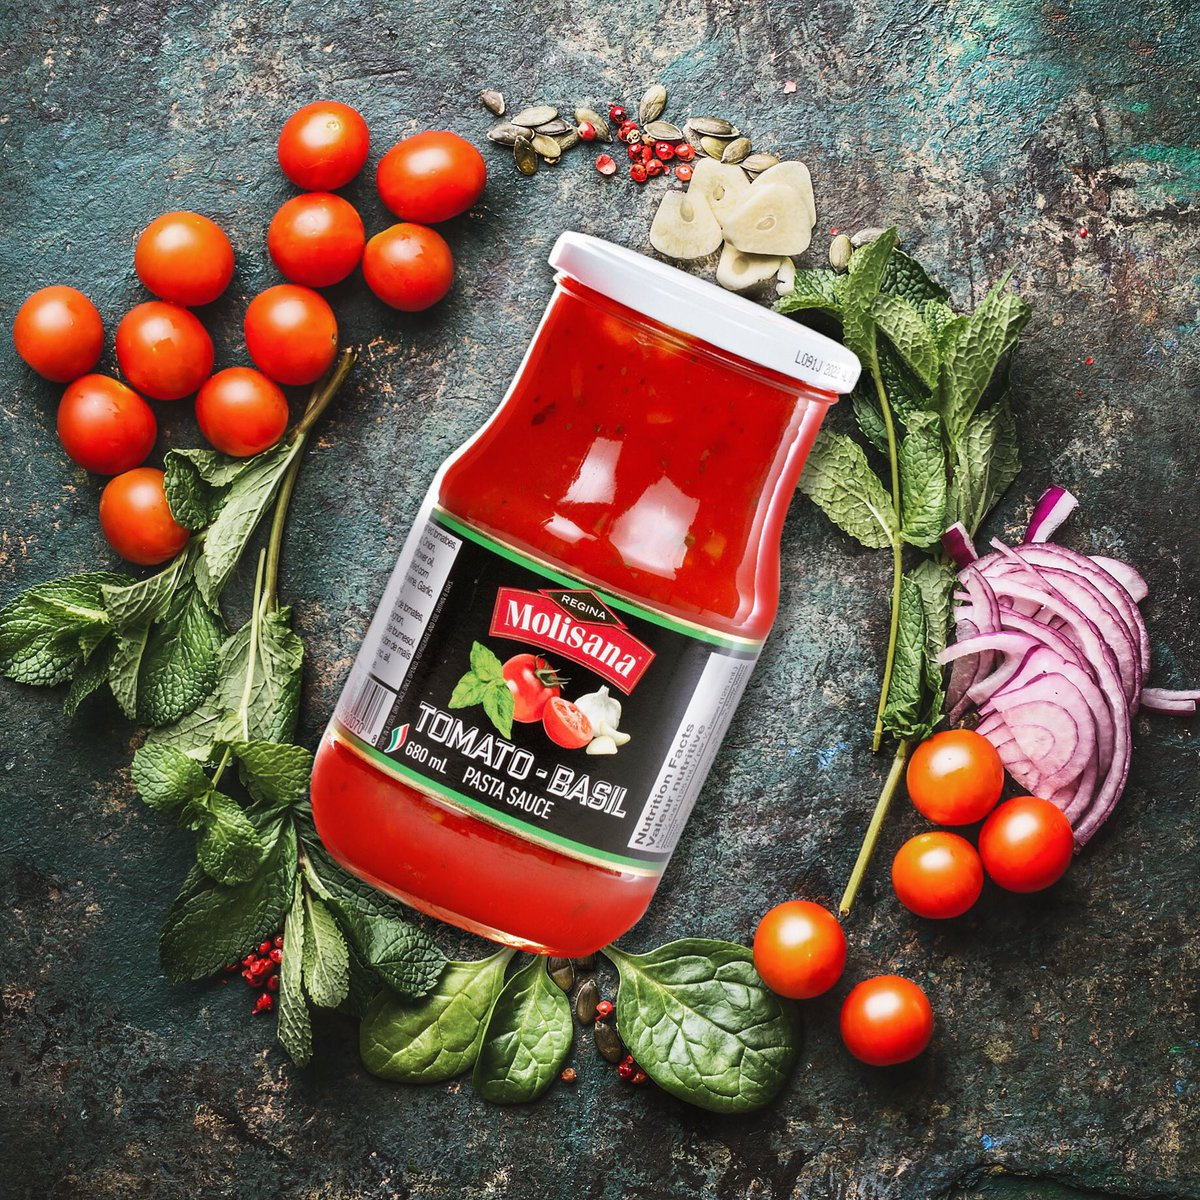 Regina Molisana - Tomato Basil Pasta Sauce